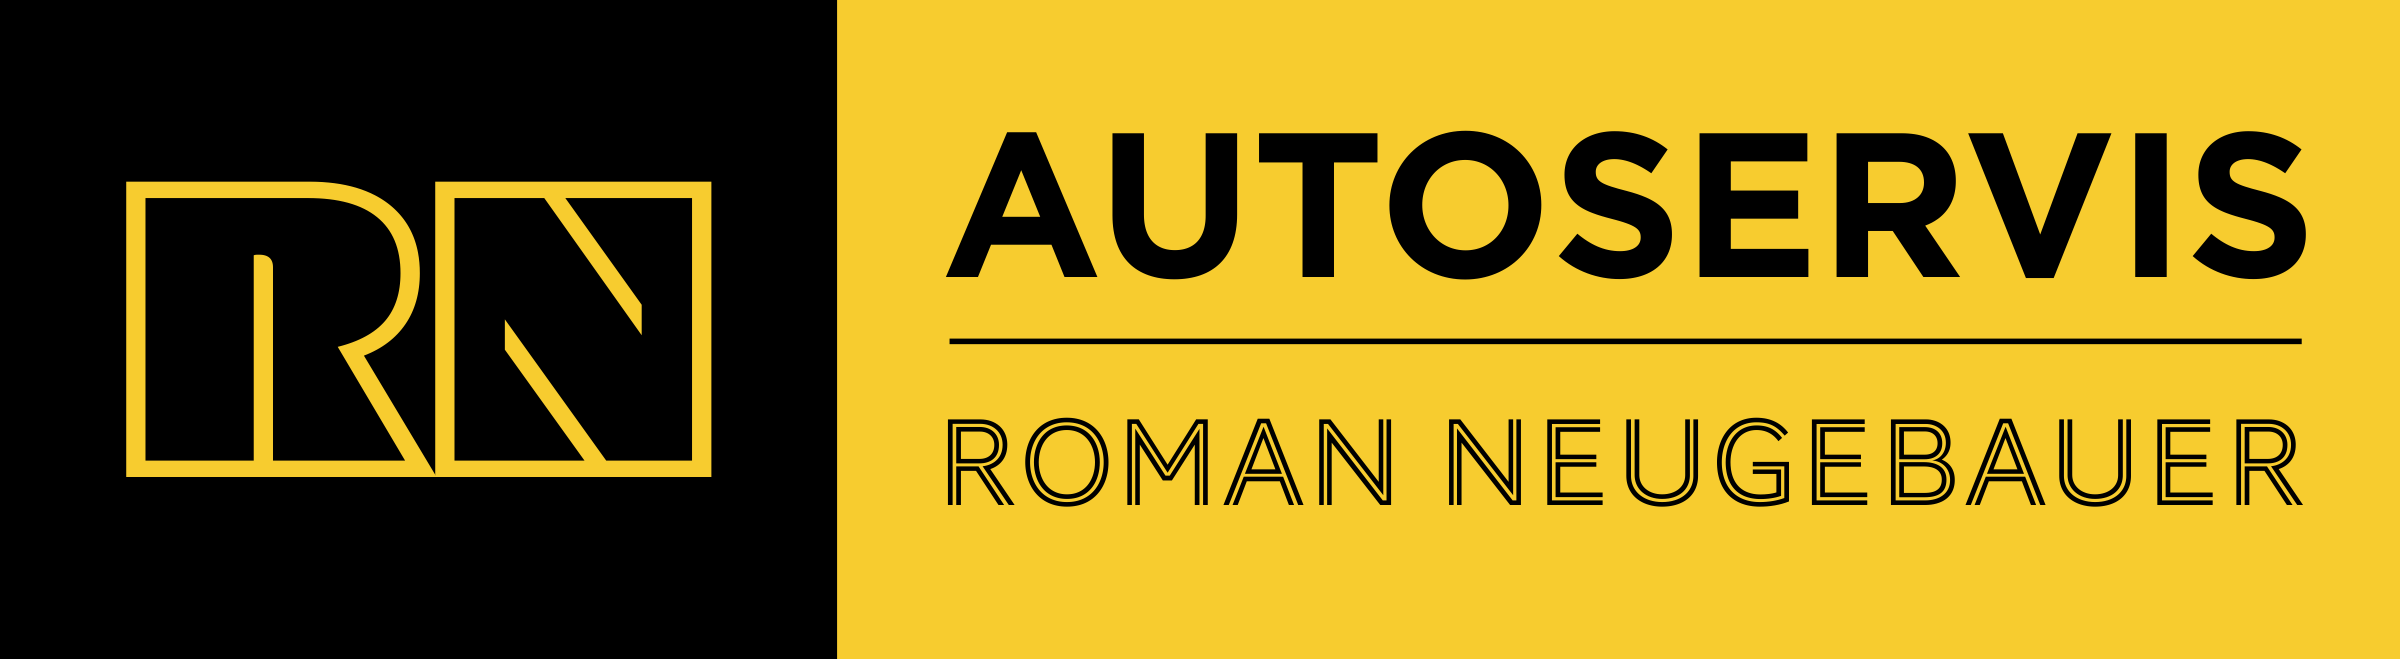 RN | Roman Neugebauer - autoservis [logo]